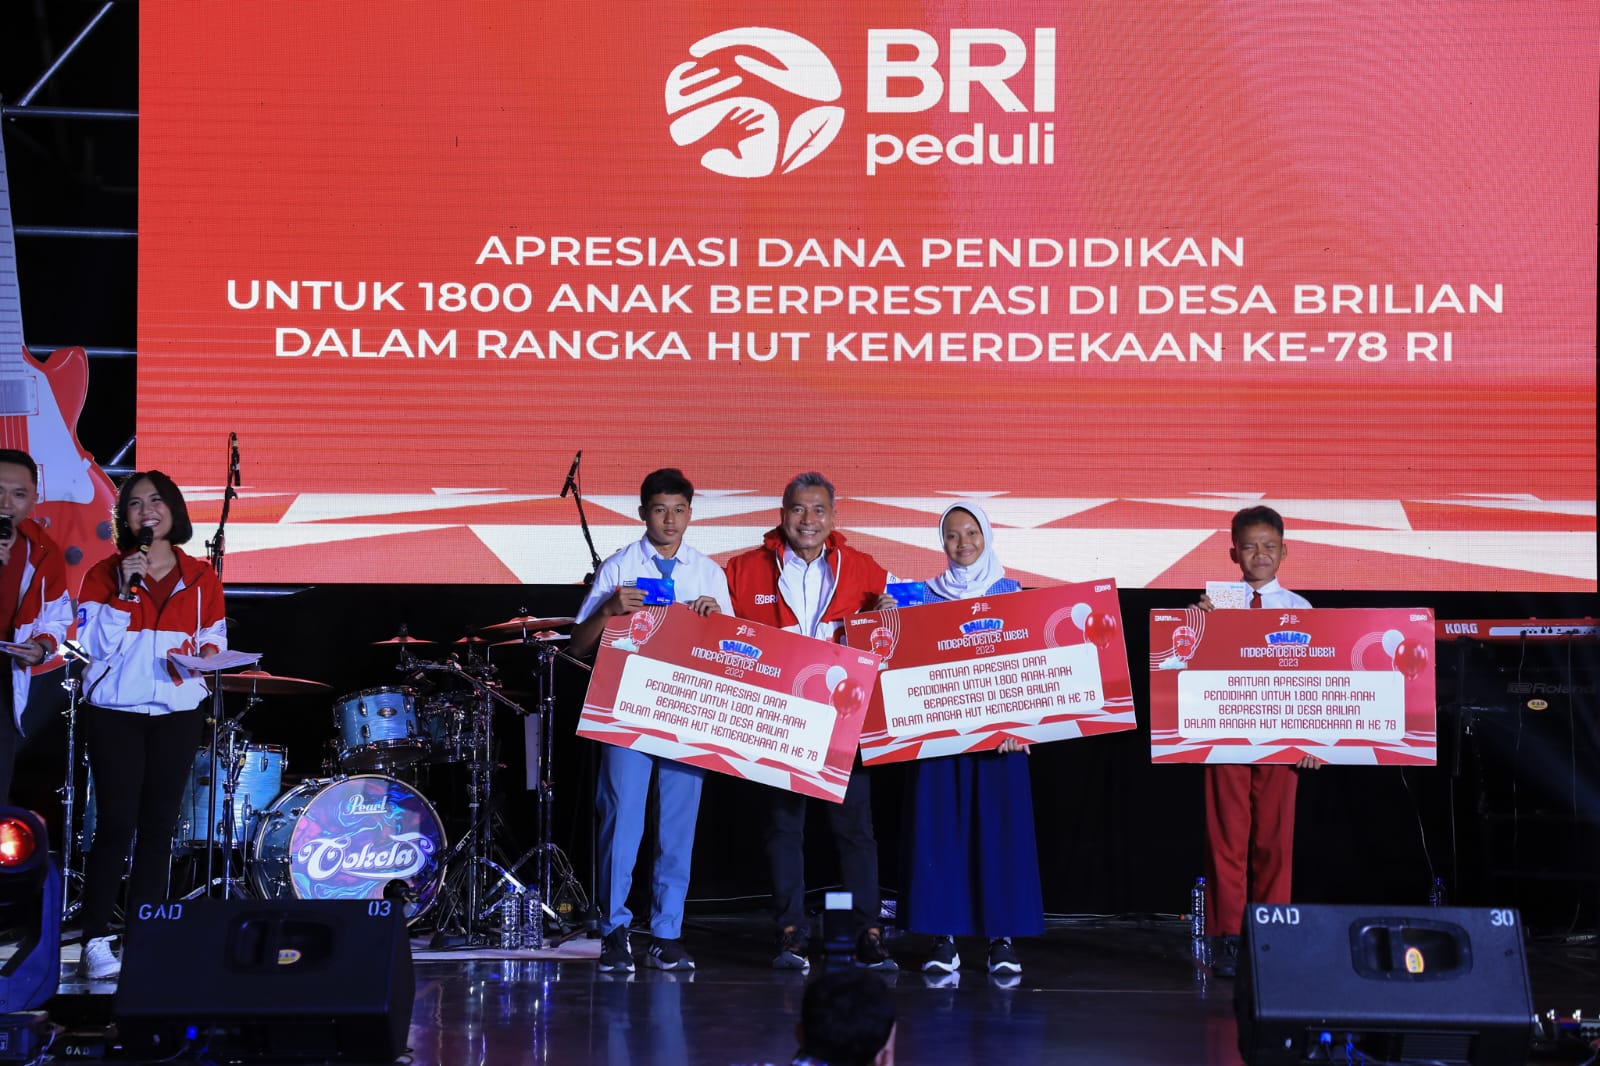 Peringati Hari Kemerdekaan Republik Indonesia, BRI Salurkan Beasiswa untuk 1800 Anak Berprestasi di Desa BRILi